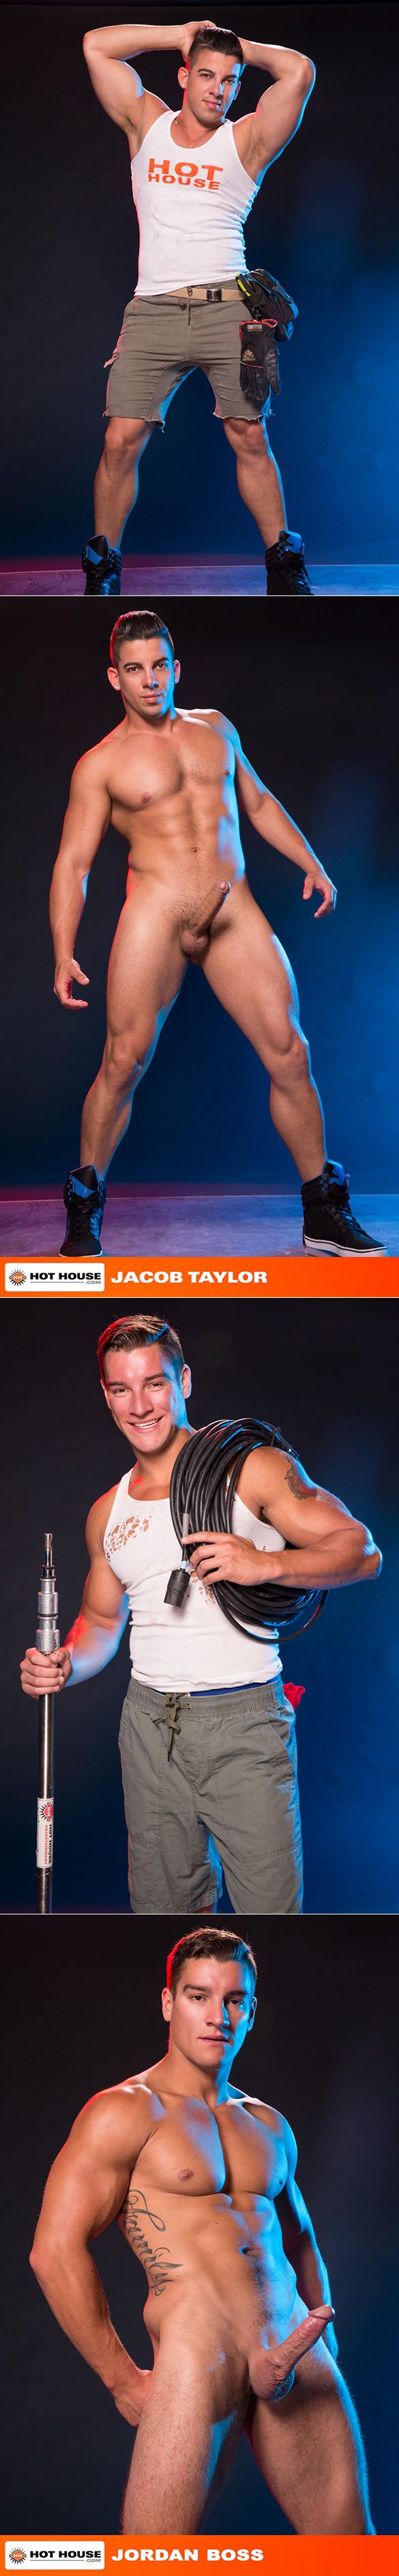 HotHouse: Jacob Taylor fucks Jordan Boss in "Depths of Focus"